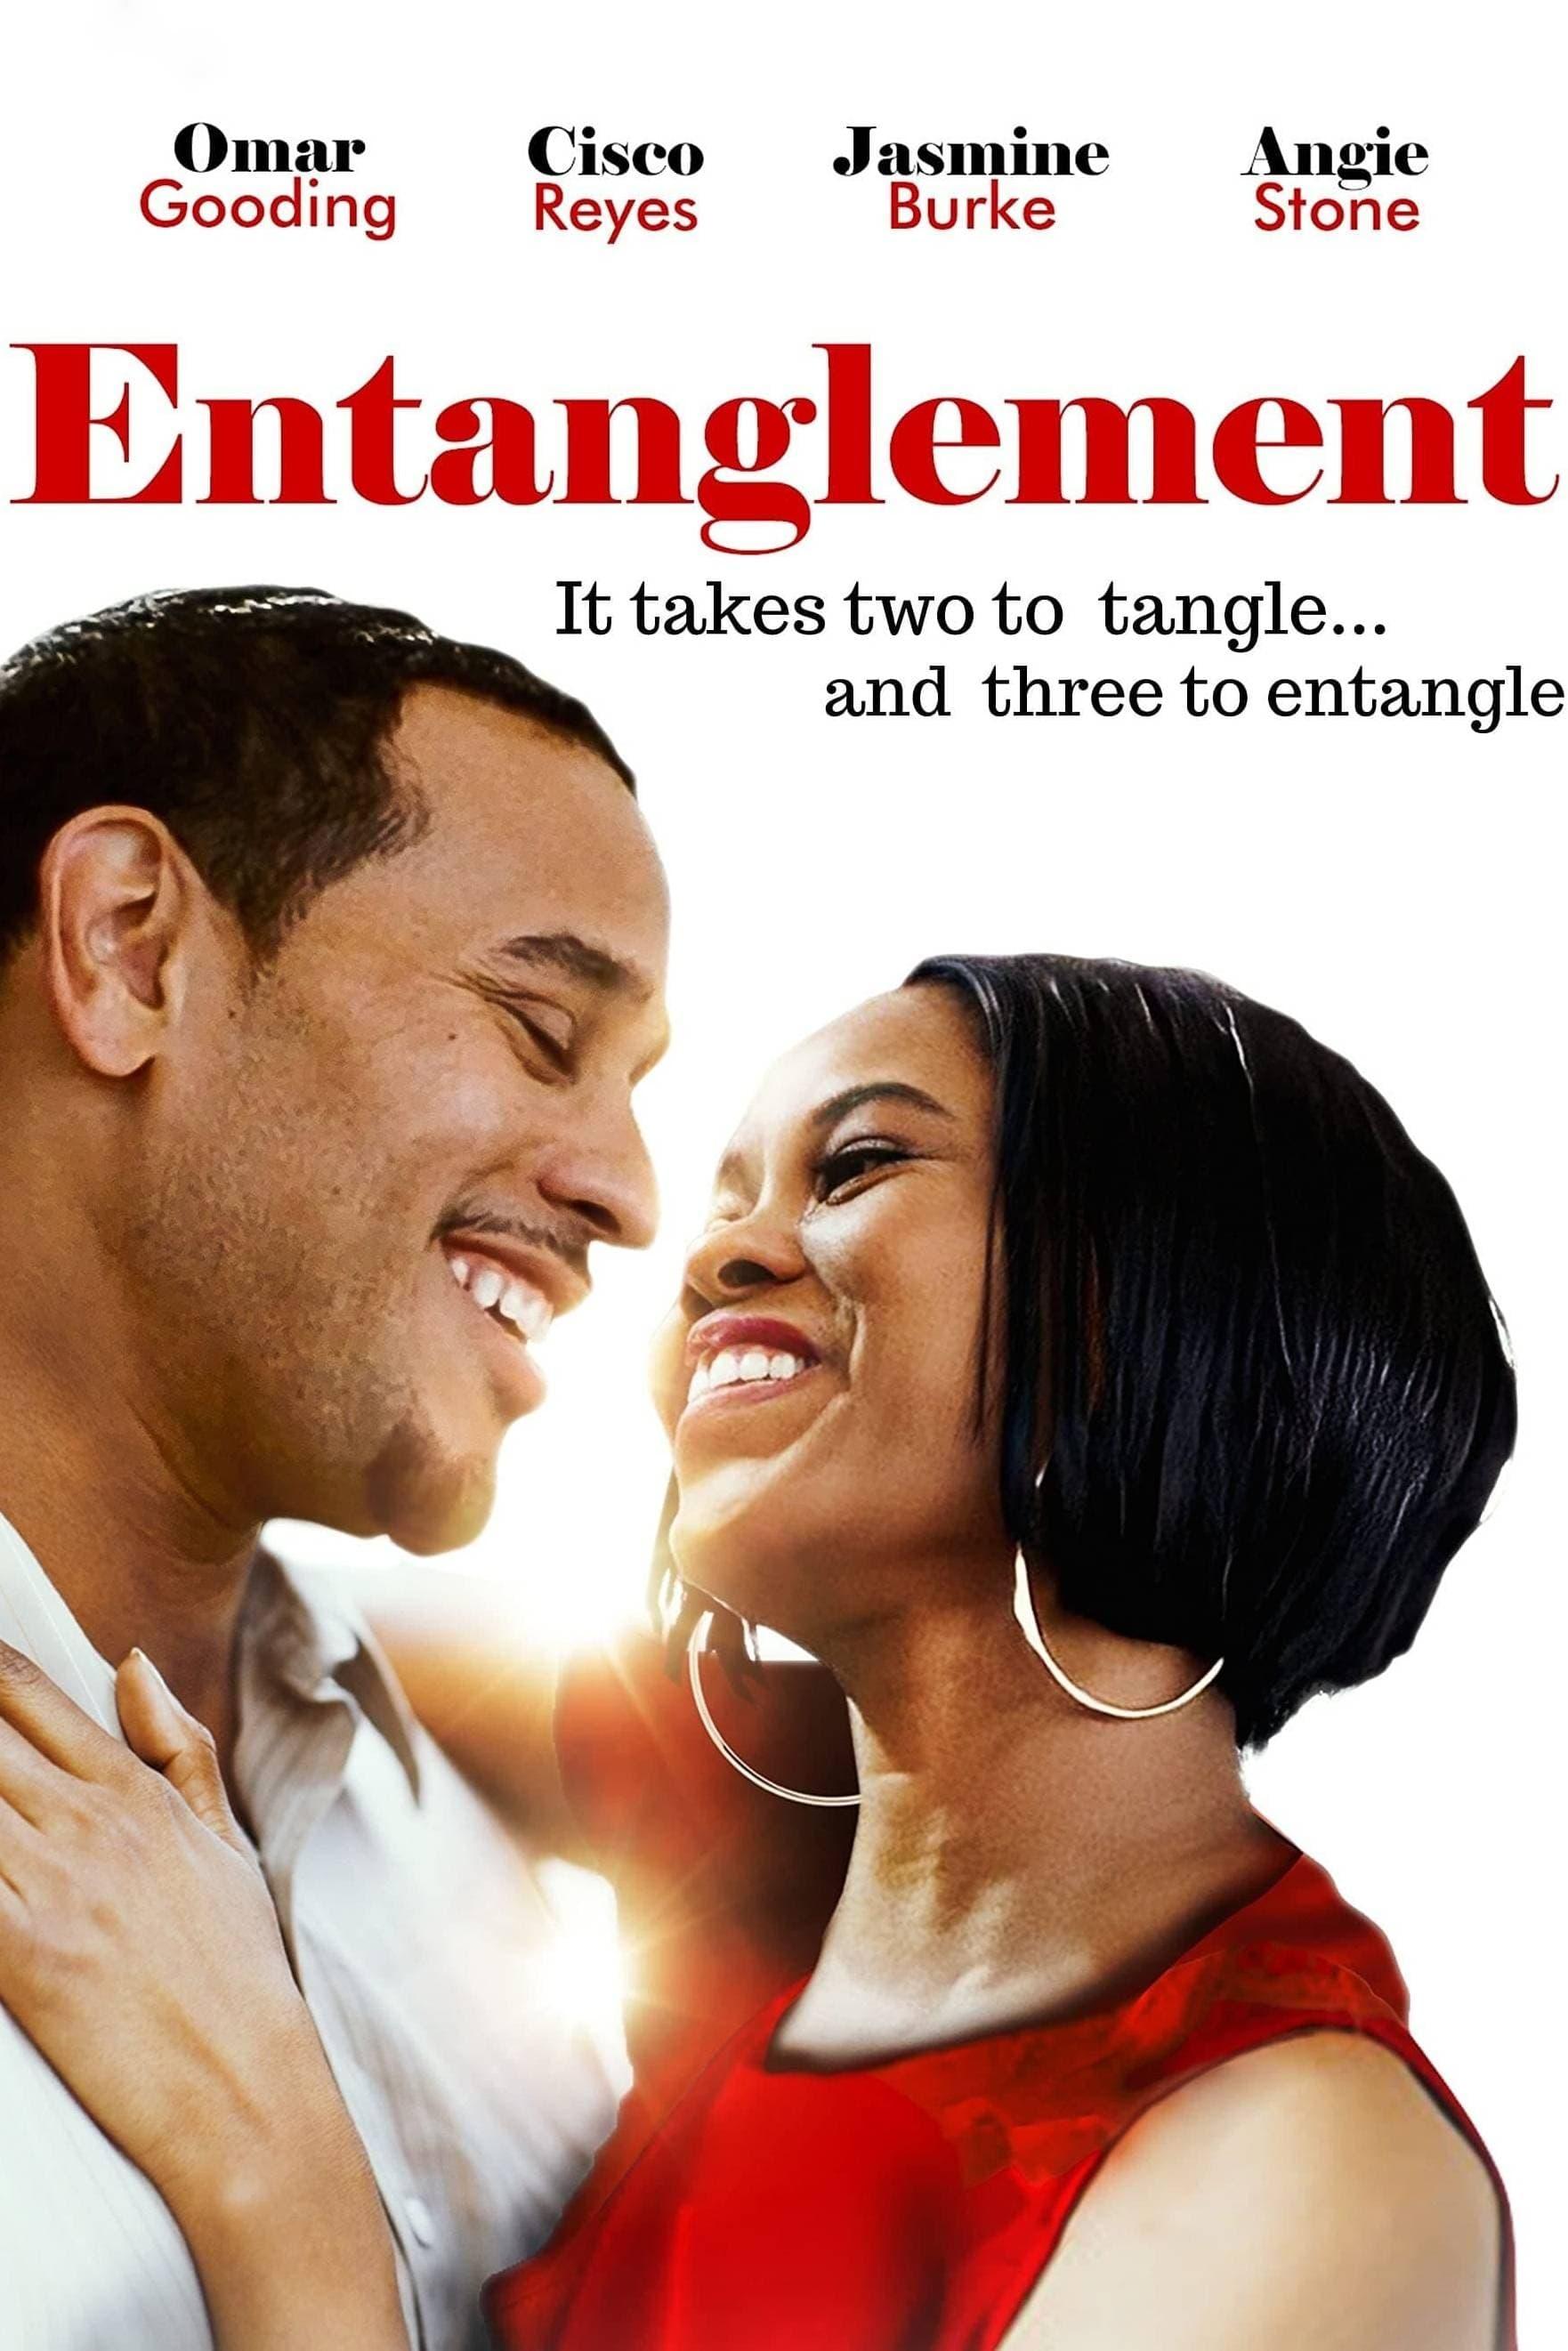 Entanglement poster